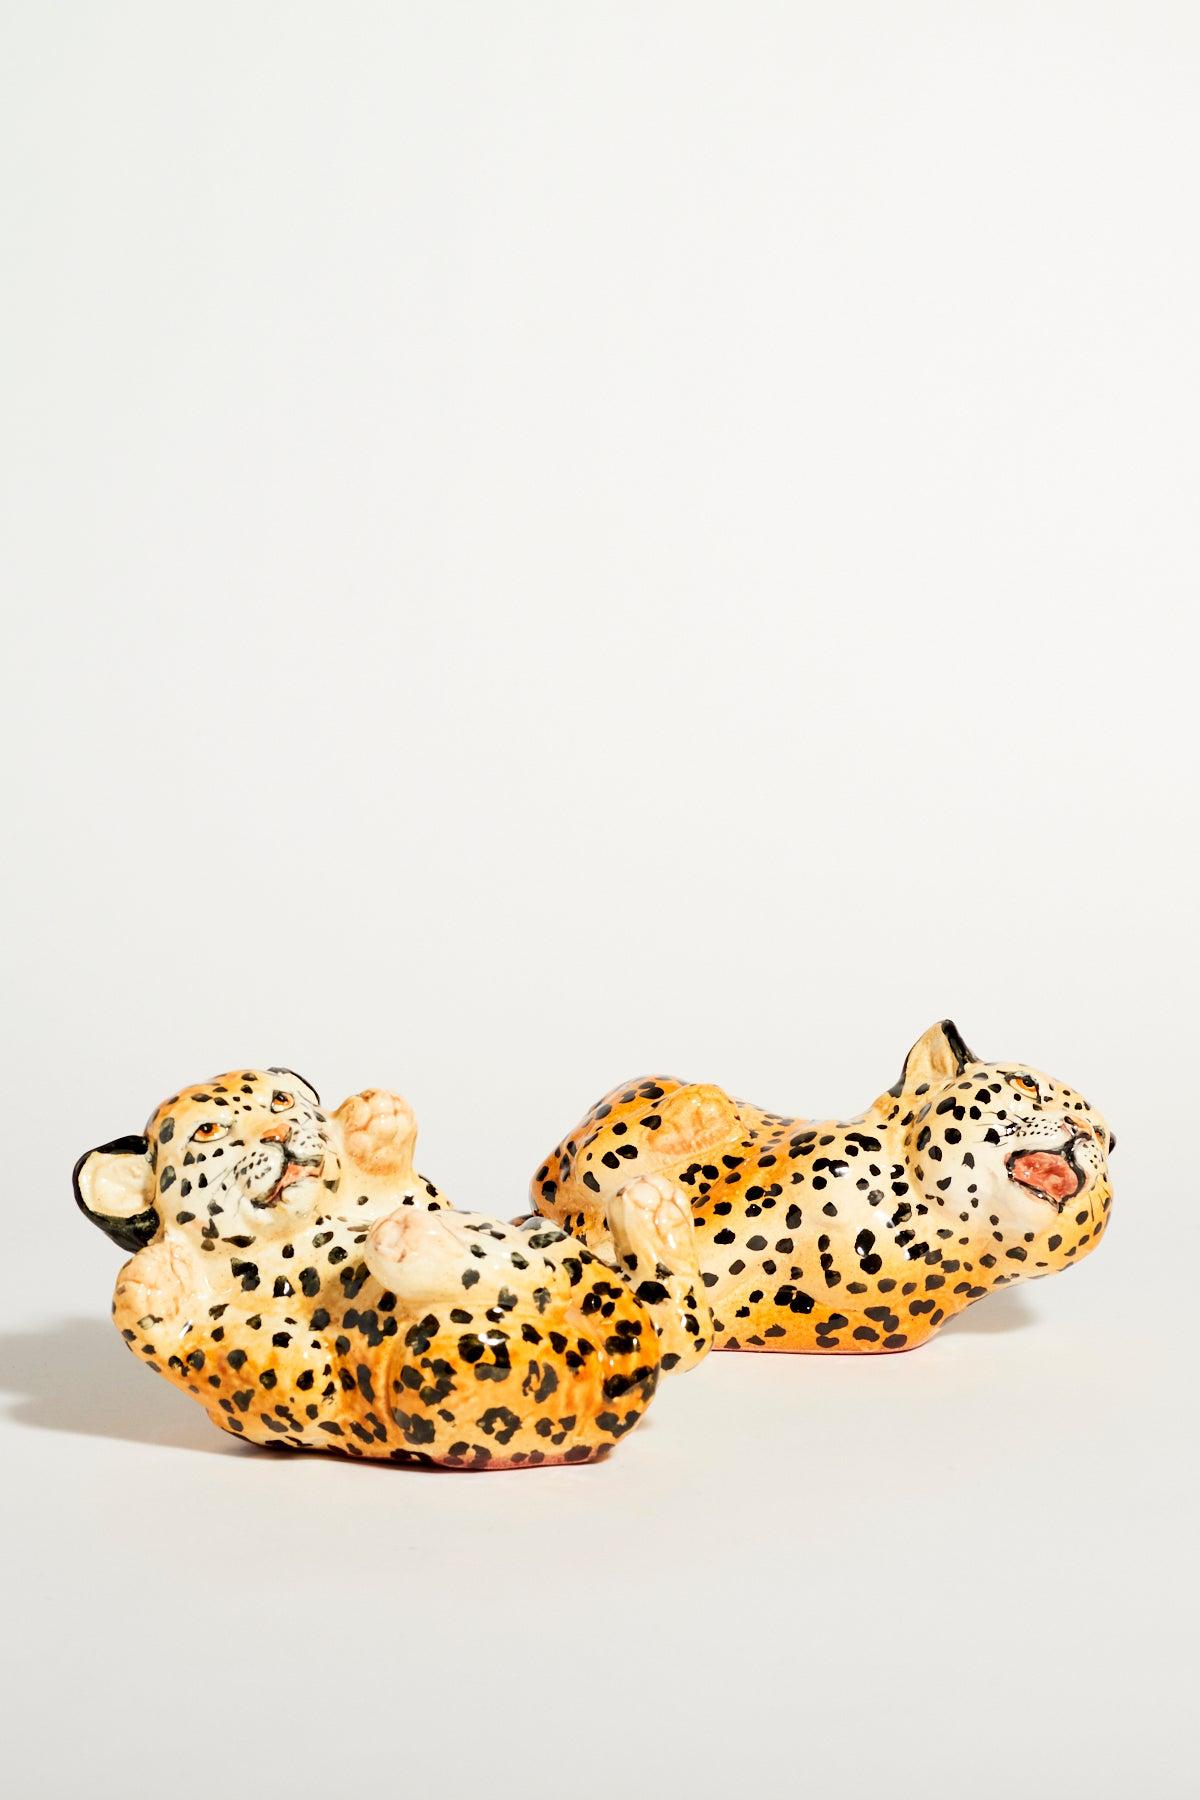 Hand Painted Italian ceramic leopard cub set of two.